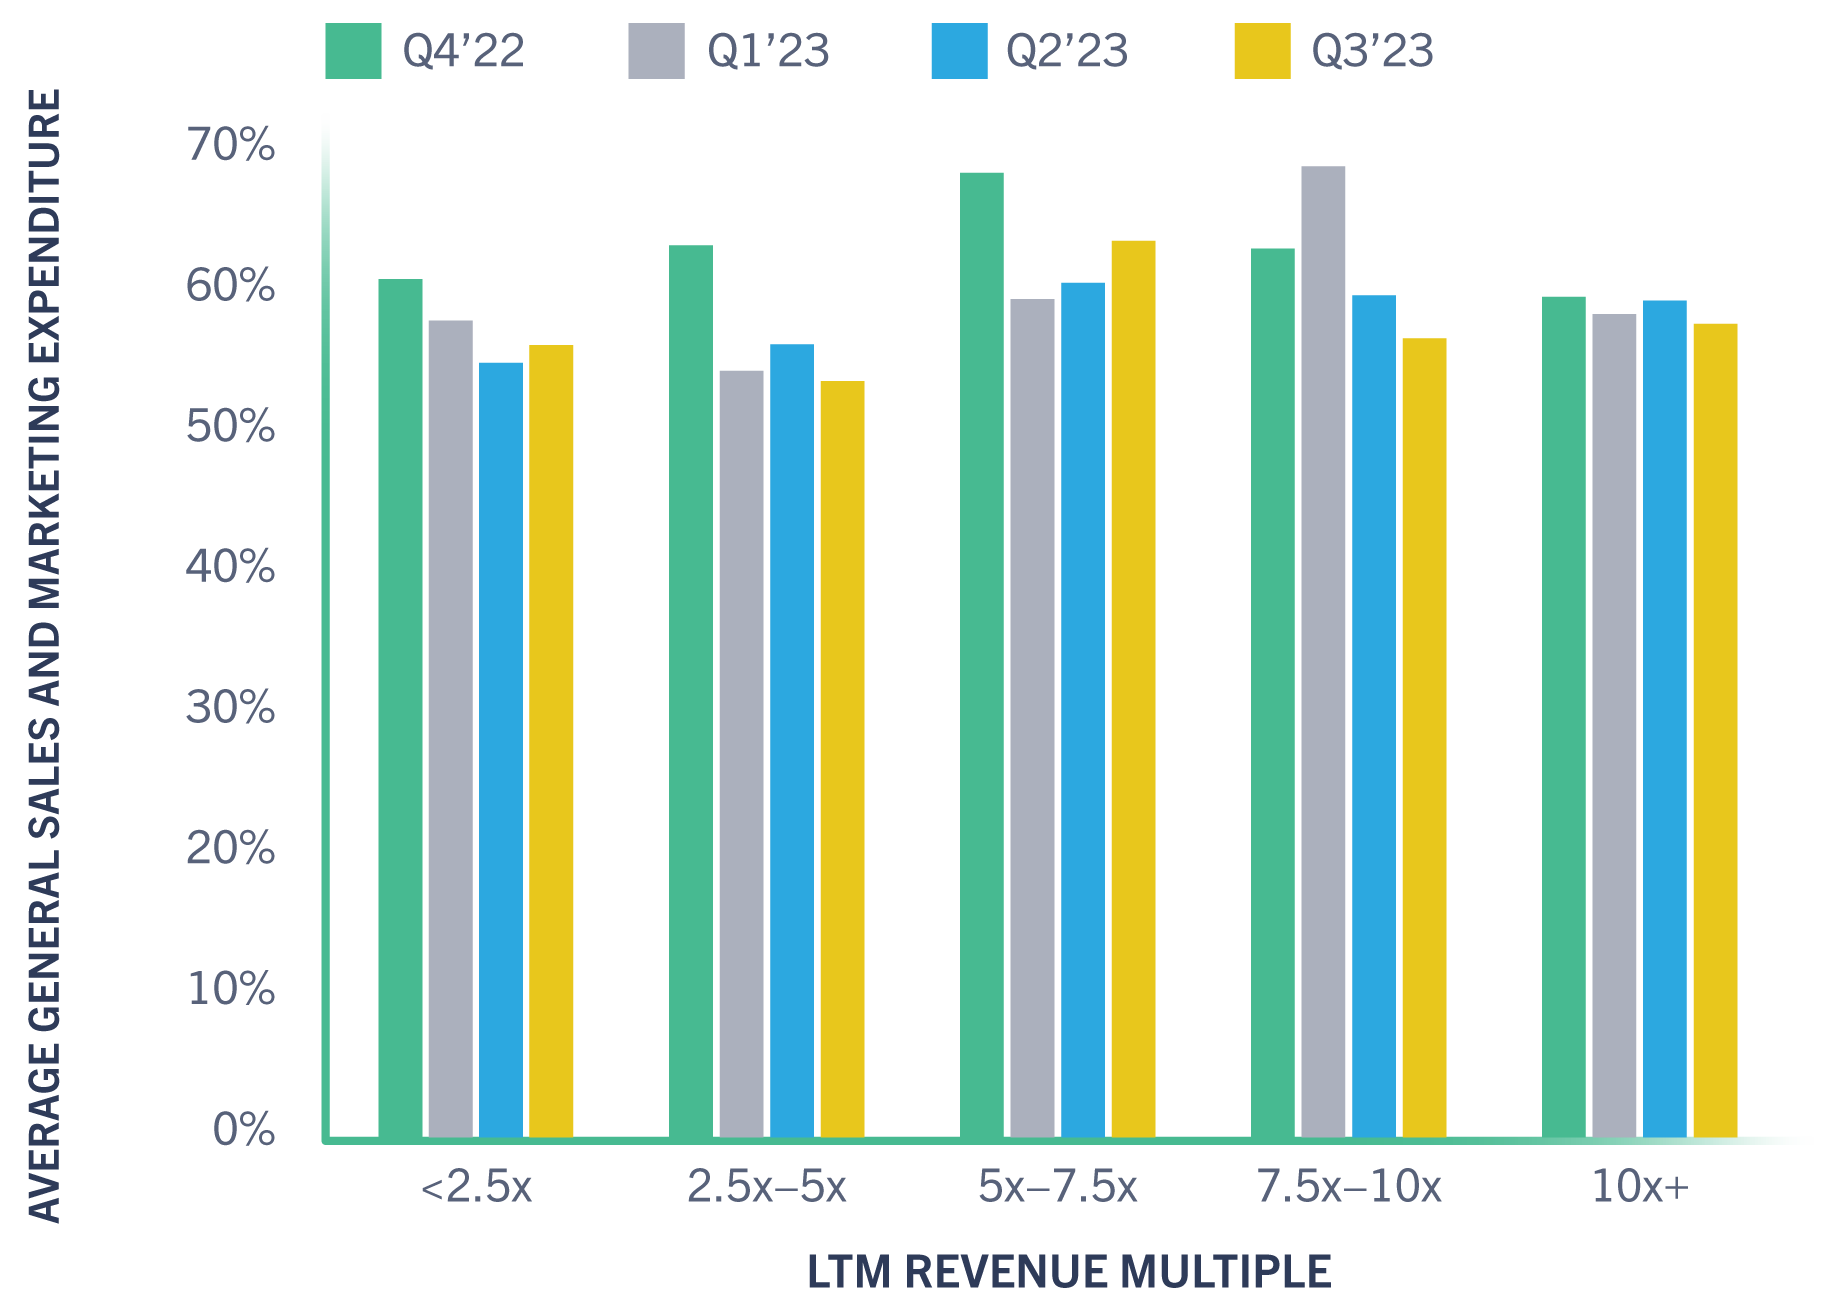 GC Public SaaS Tracker Average Sales and Marketing Expenditure (%) vs. LTM Revenue Multiple